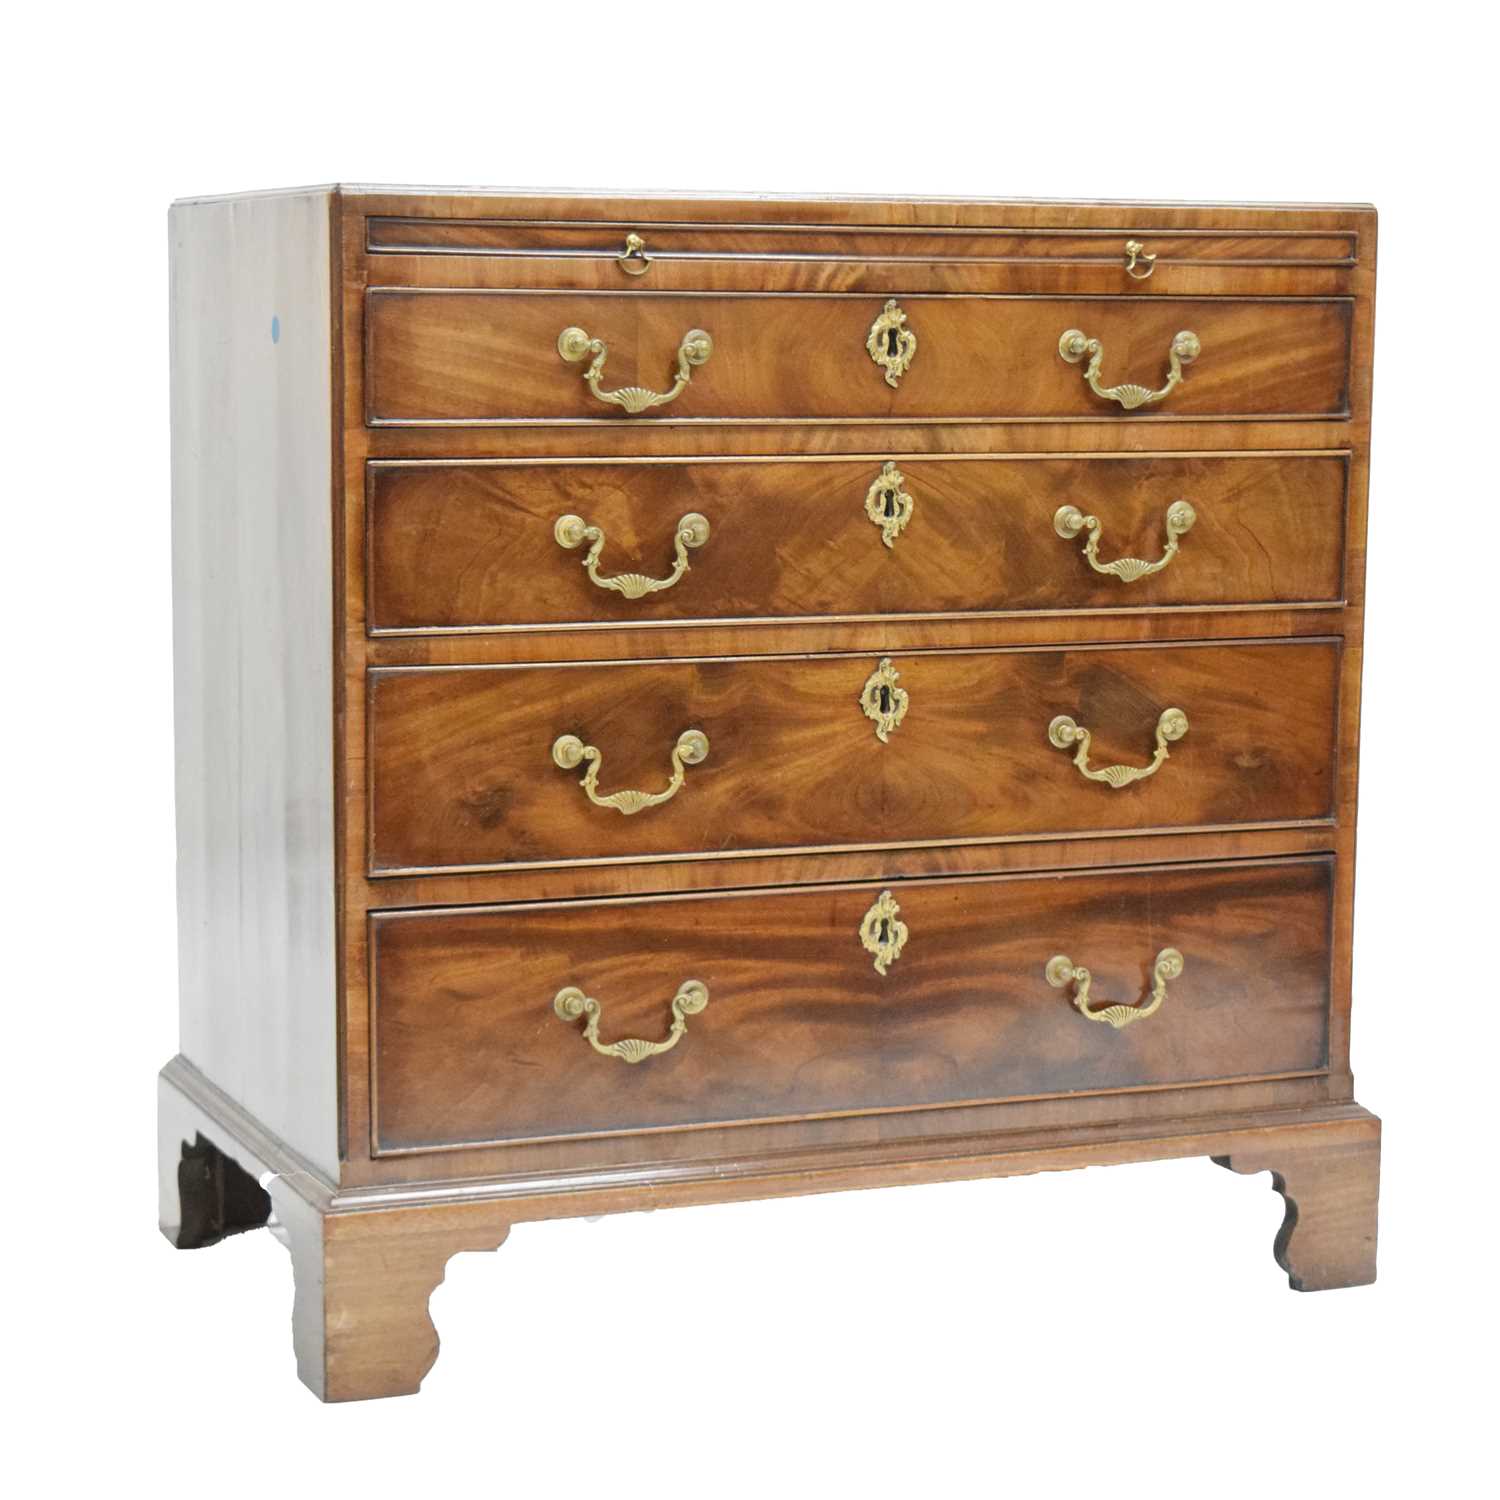 Mahogany four-drawer chest